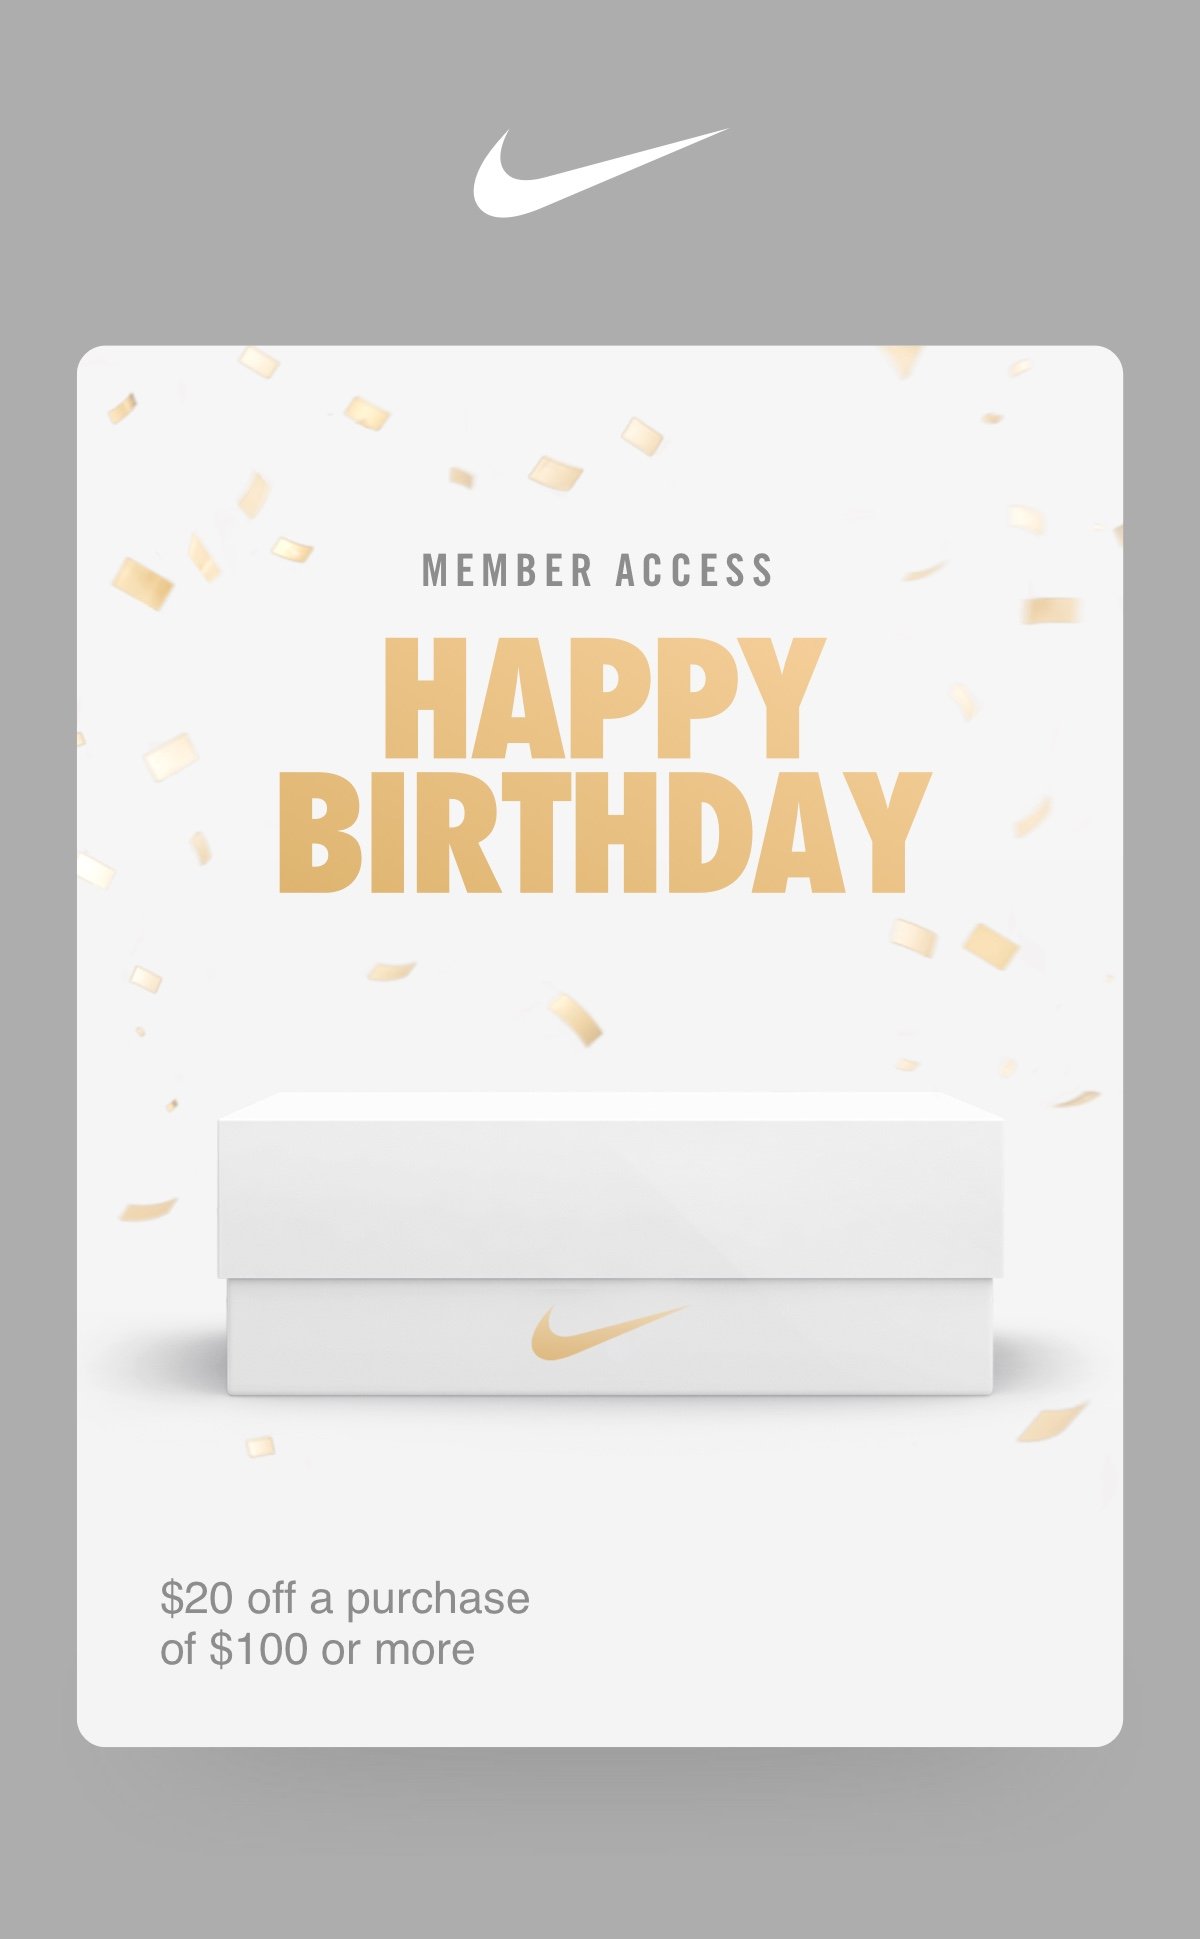 Nike plus +: Happy birthday from Nike 